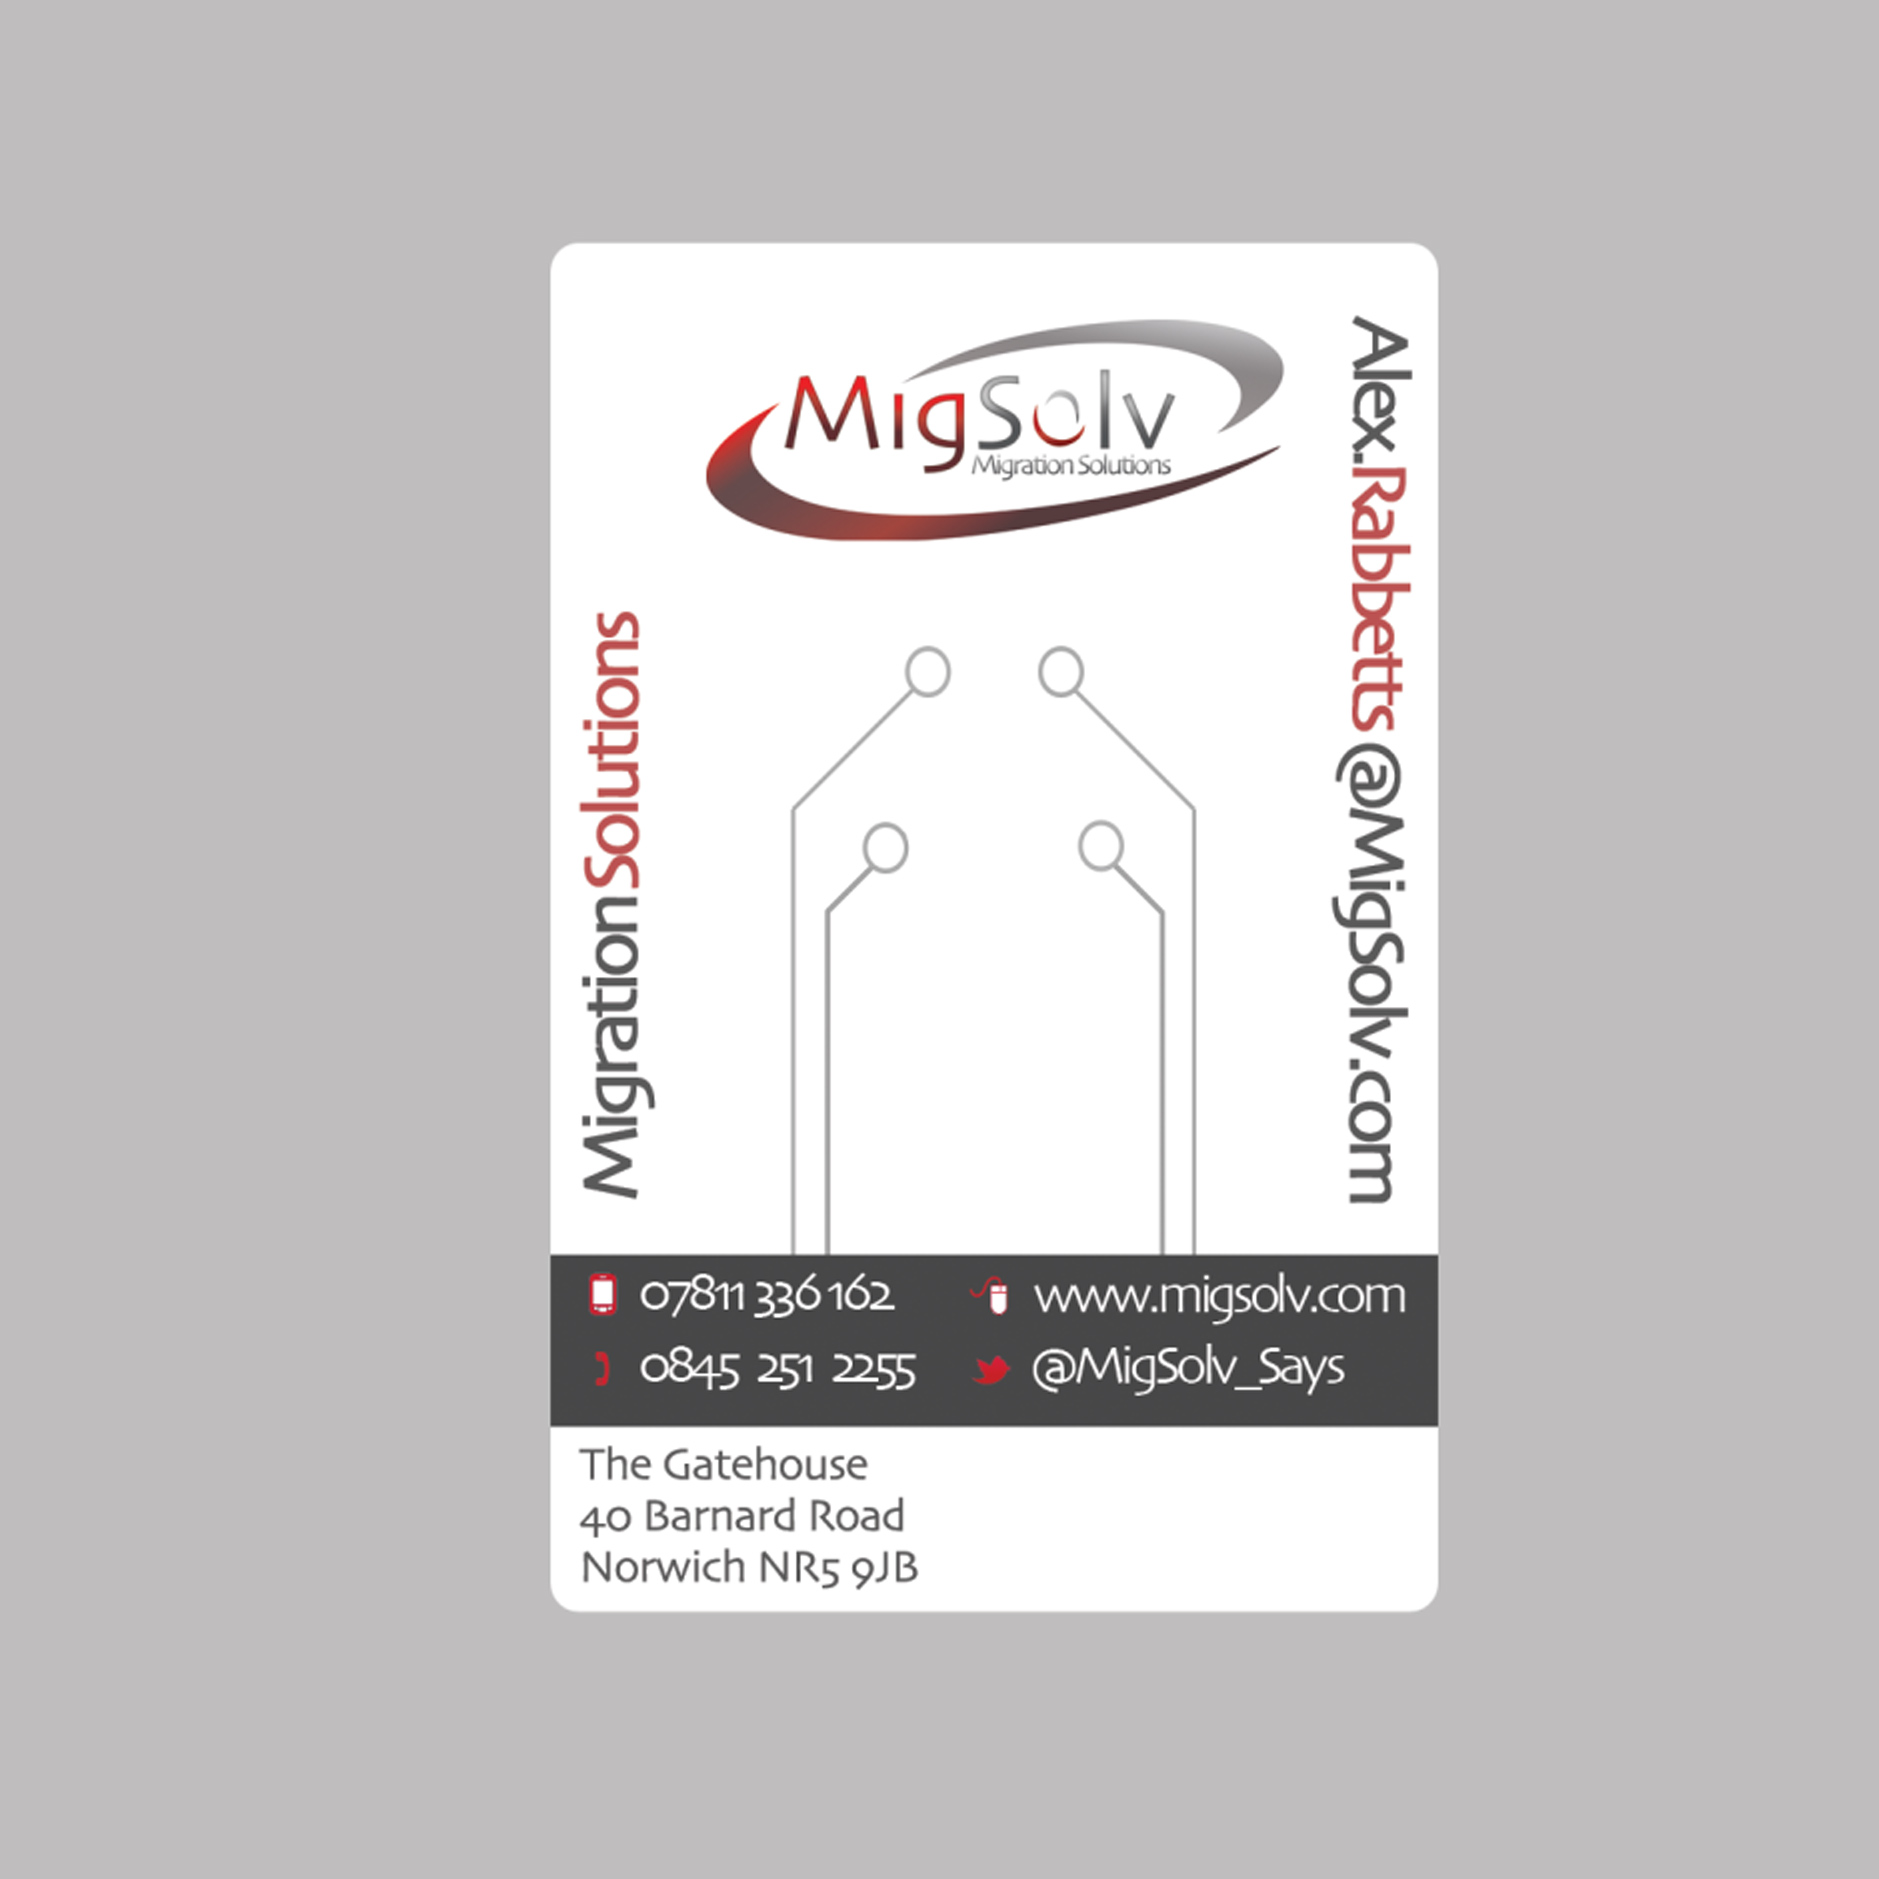 MigSolv Business Cards